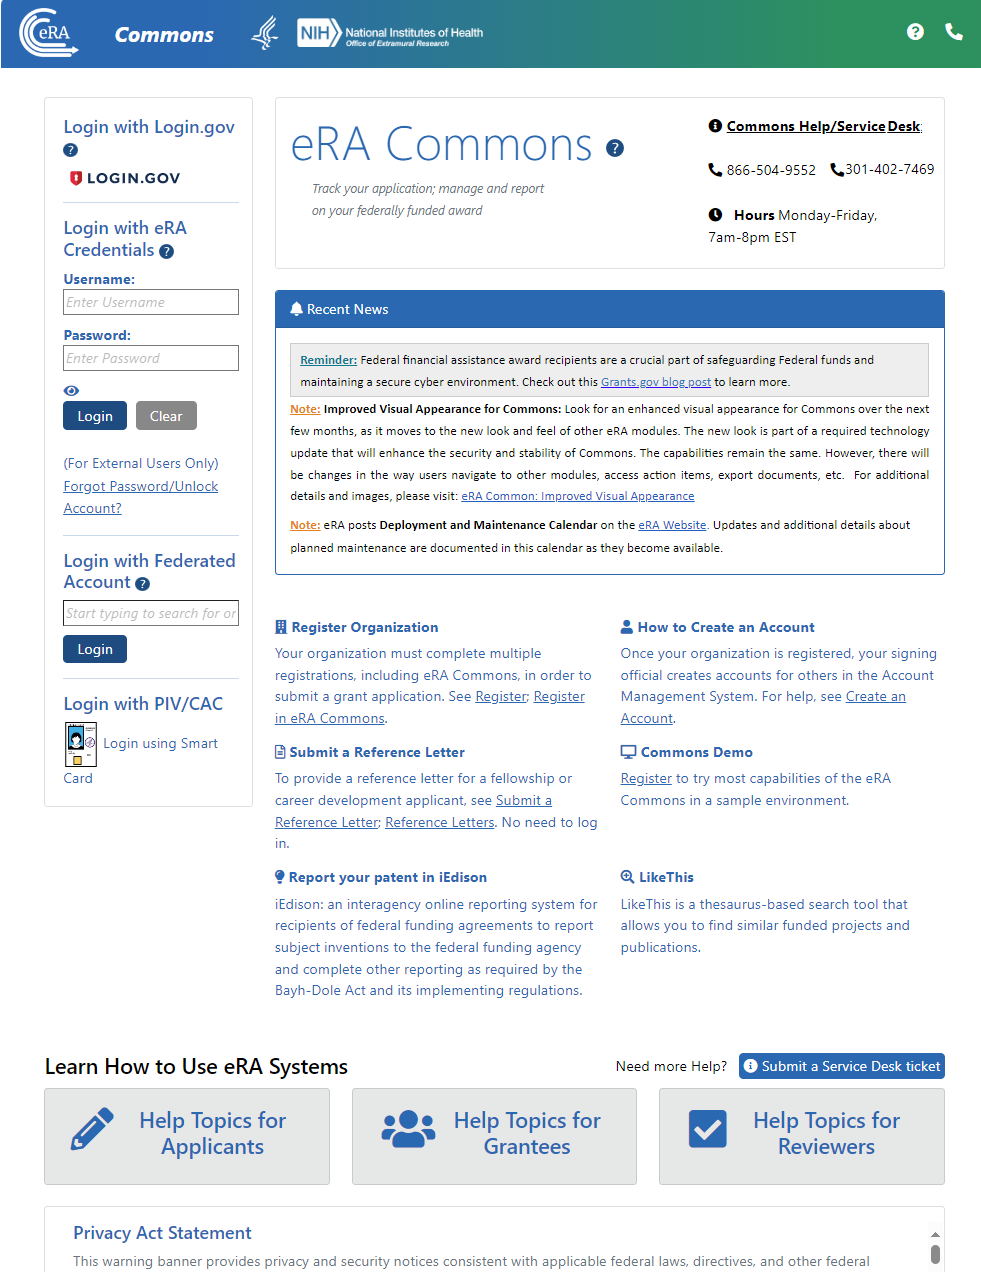 eRA Commons login screen